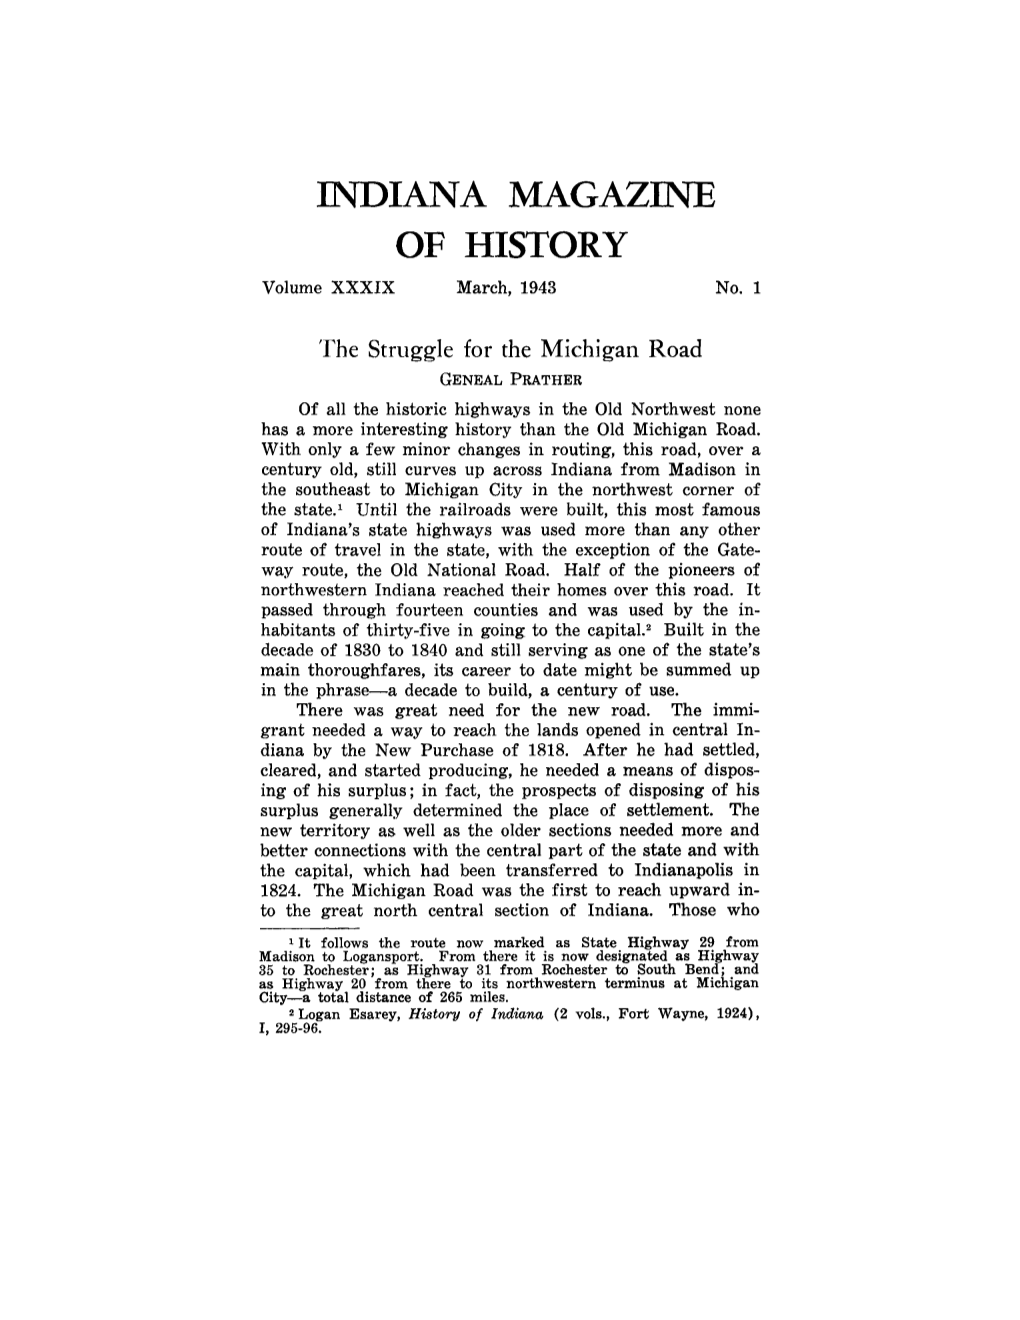 INDIANA MAGAZINE of HISTORY Volume XXXIX March, 1943 No